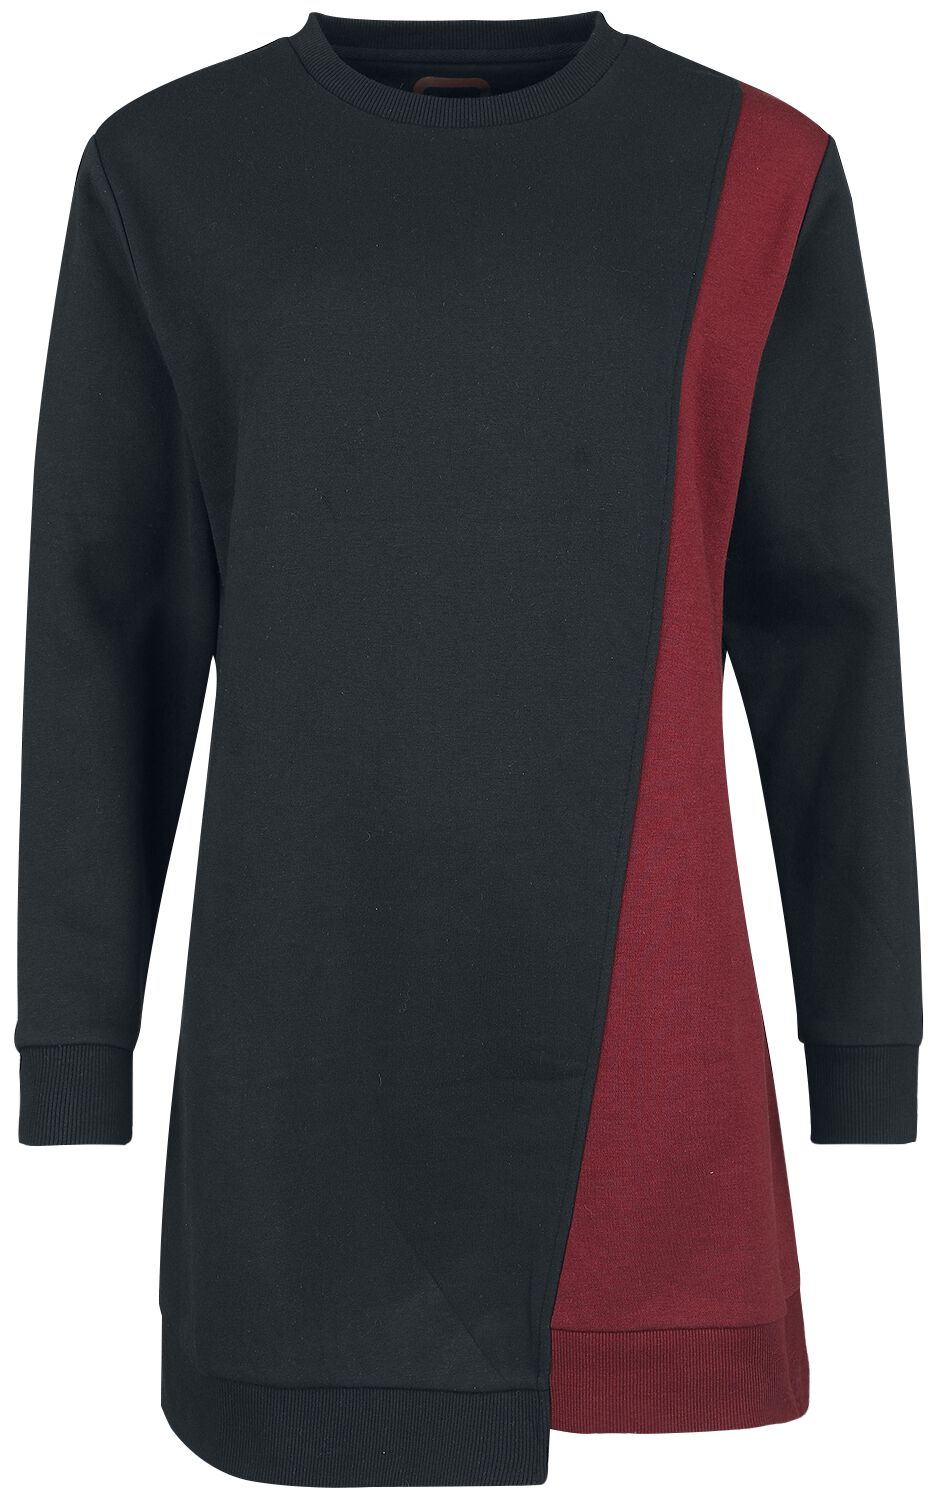 RED by EMP Sweatshirt Dress with asymmetrical Cut Kurzes Kleid schwarz dunkelrot in XL